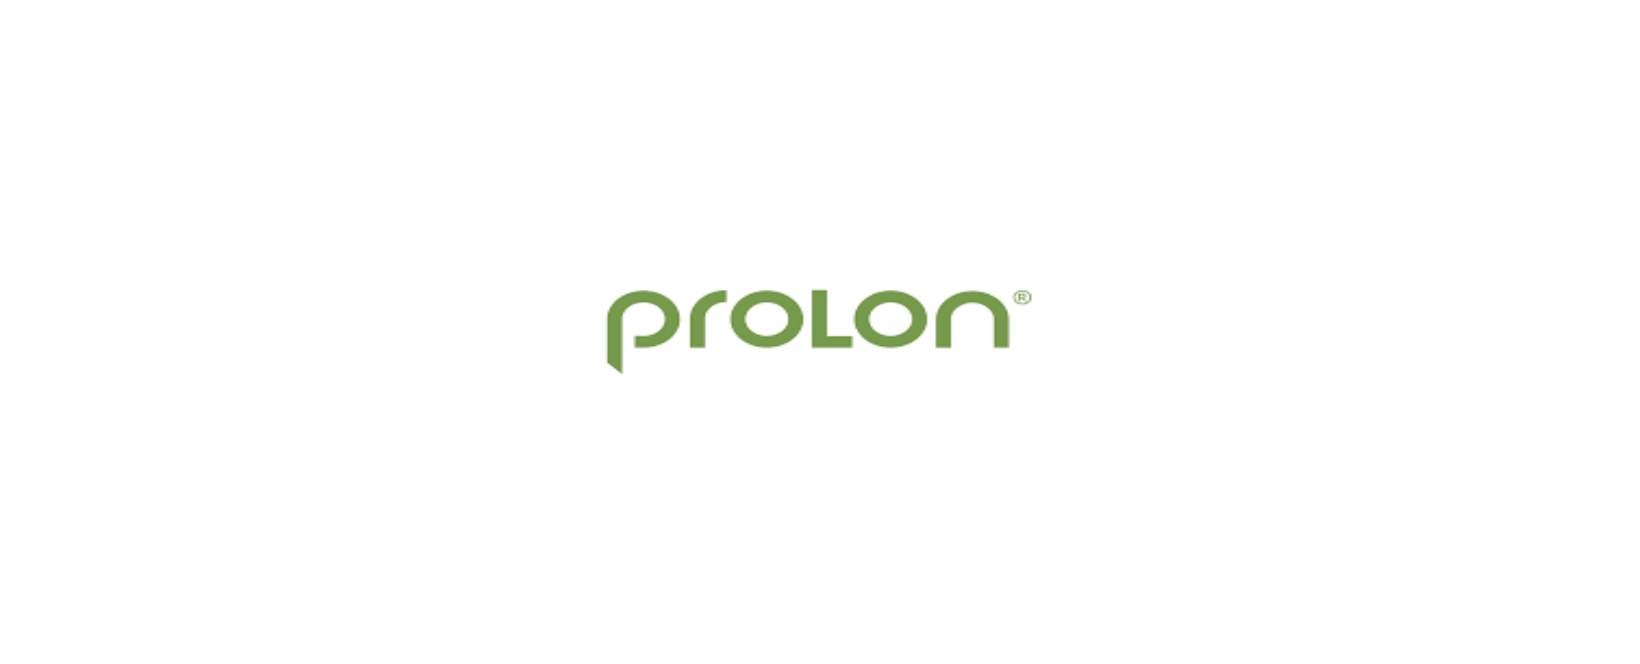 Prolon FMD Discount Code 2022